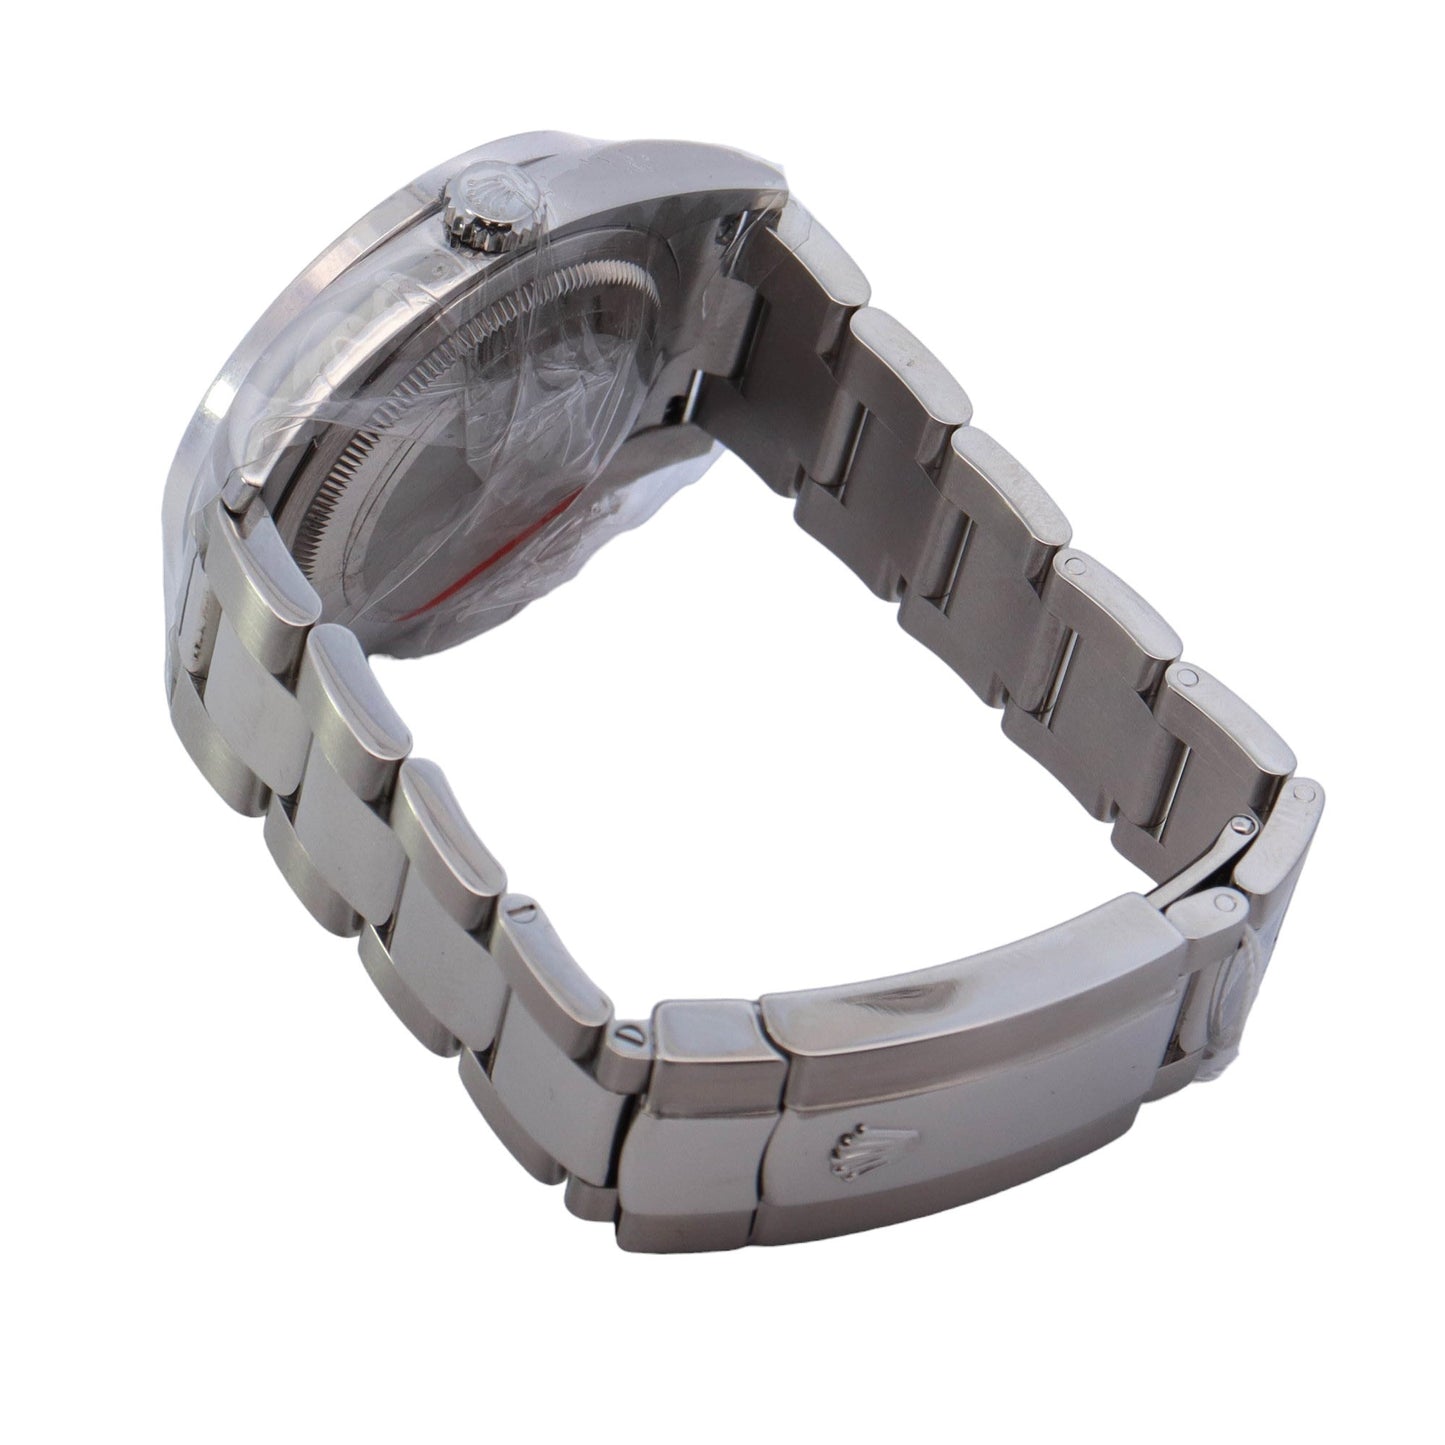 Rolex Datejust 36mm Stainless Steel White MOP Diamond Dial Watch Reference #: 116234 - Happy Jewelers Fine Jewelry Lifetime Warranty